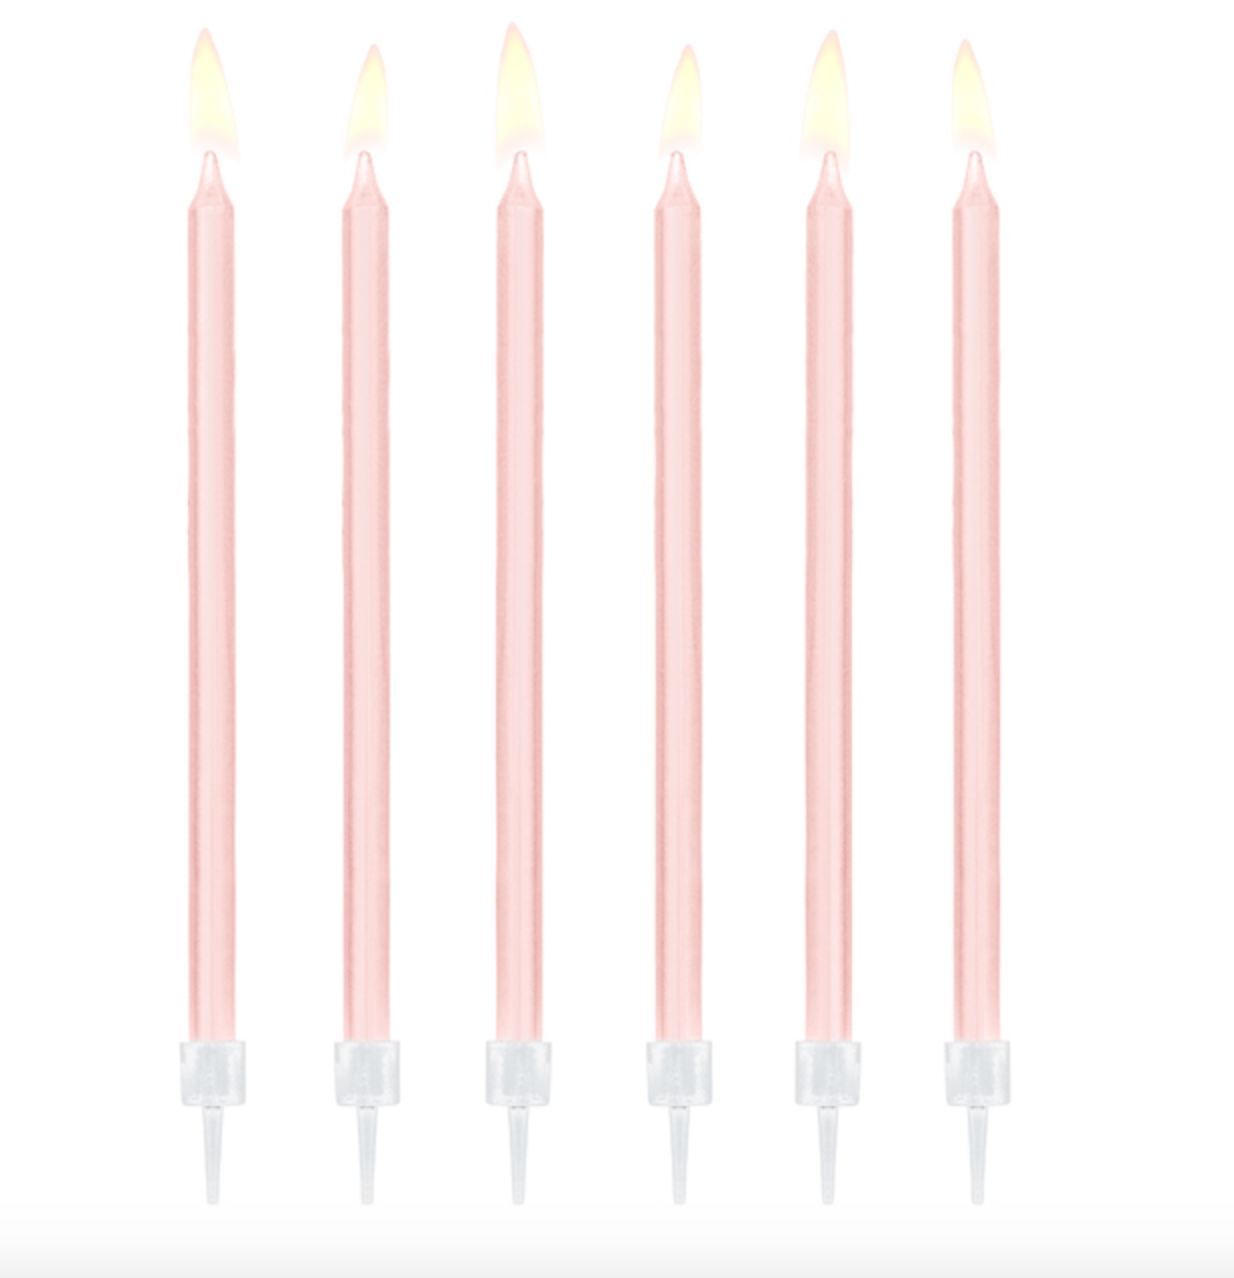 12 candeline lunghe - rosa pastello